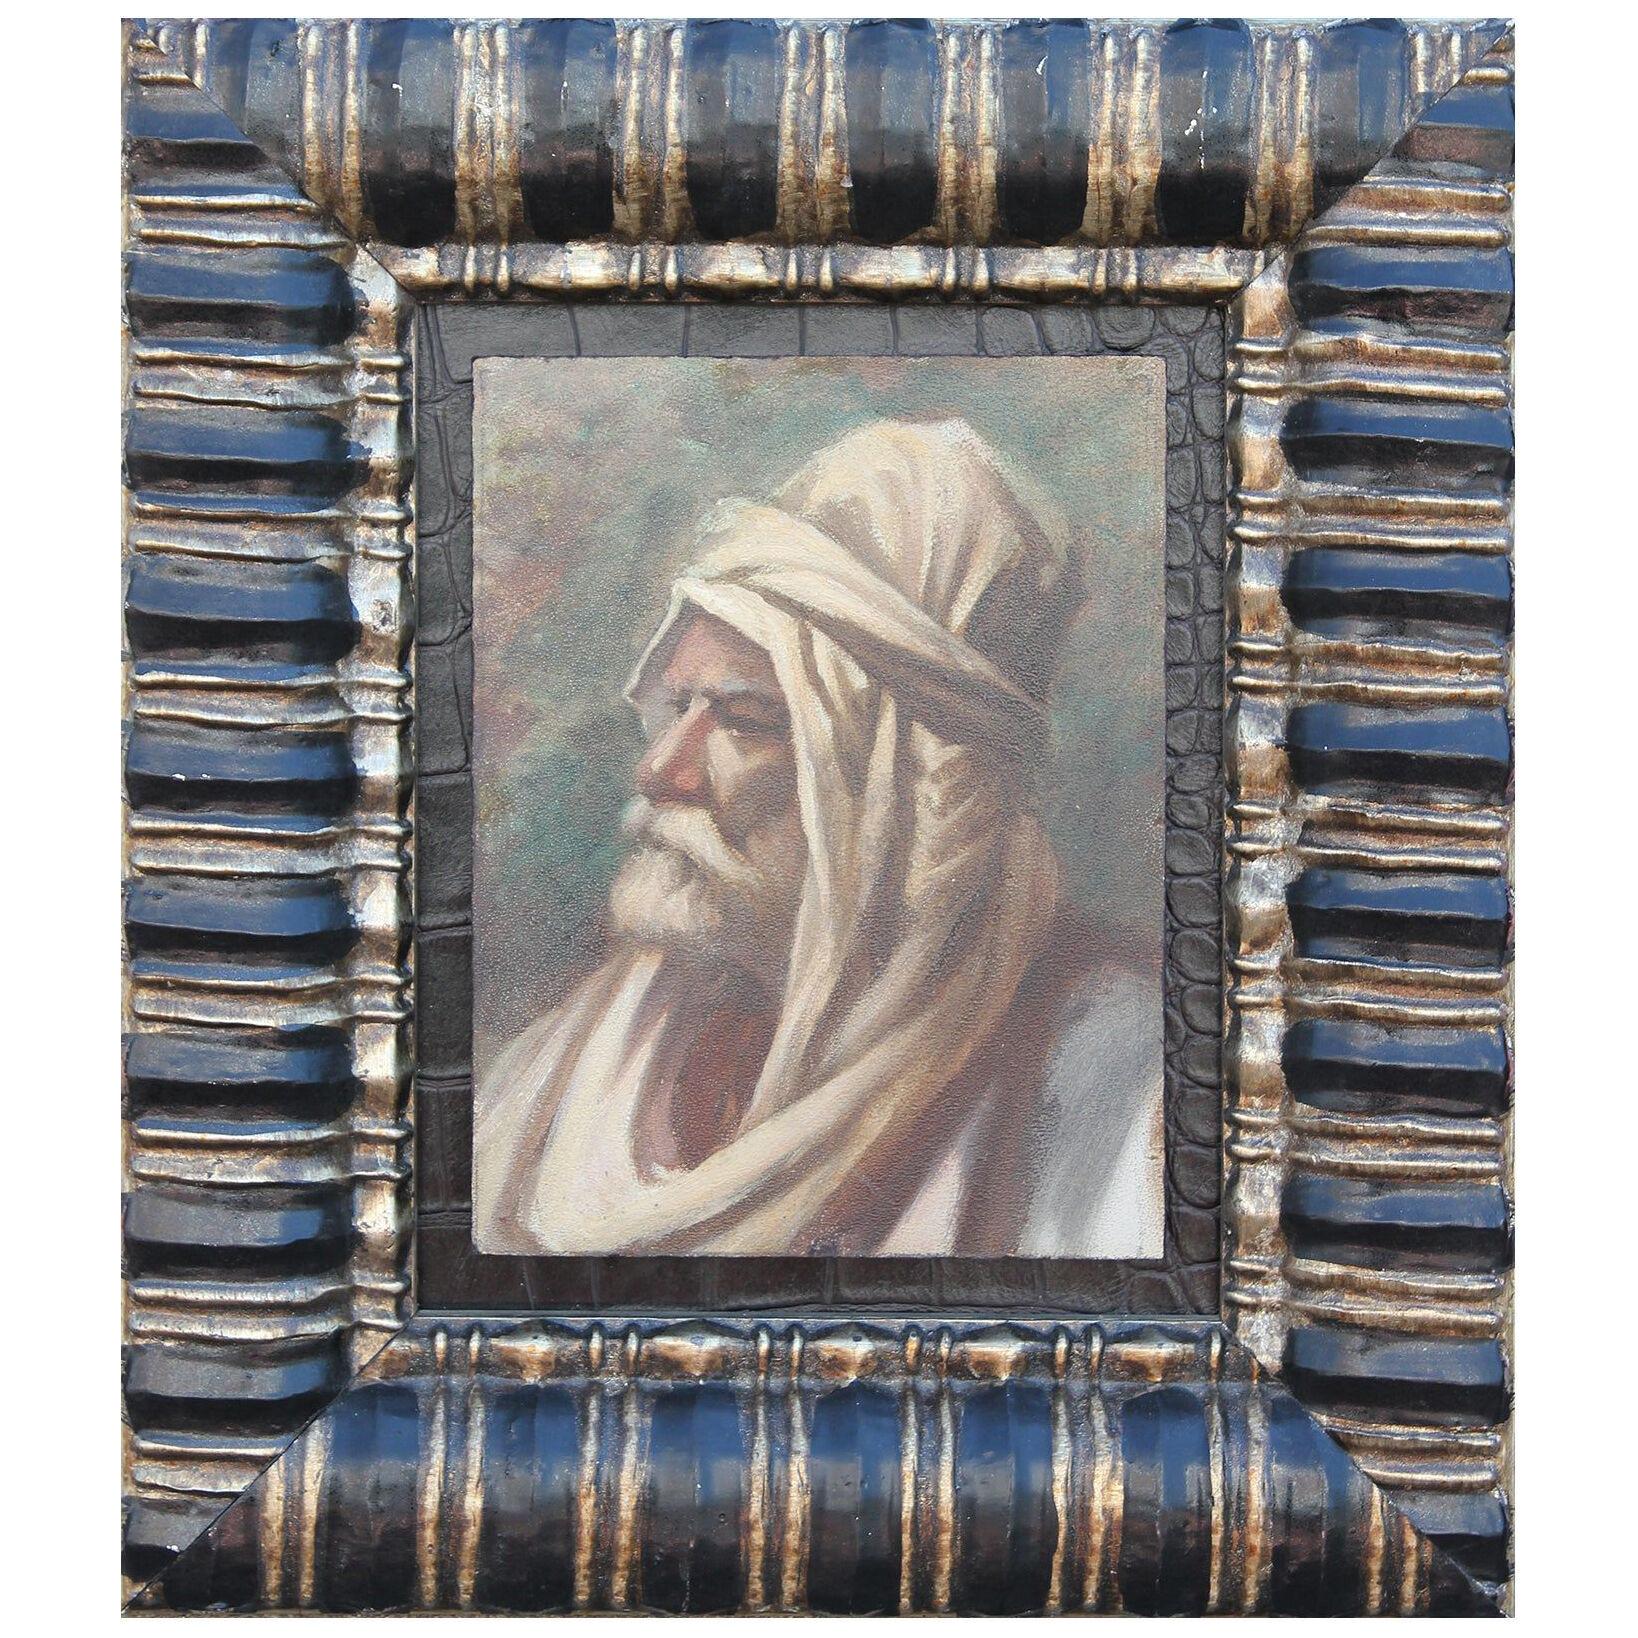 Oil Painting Portrait of an Elderly Arab Man Wearing a White Headdress	